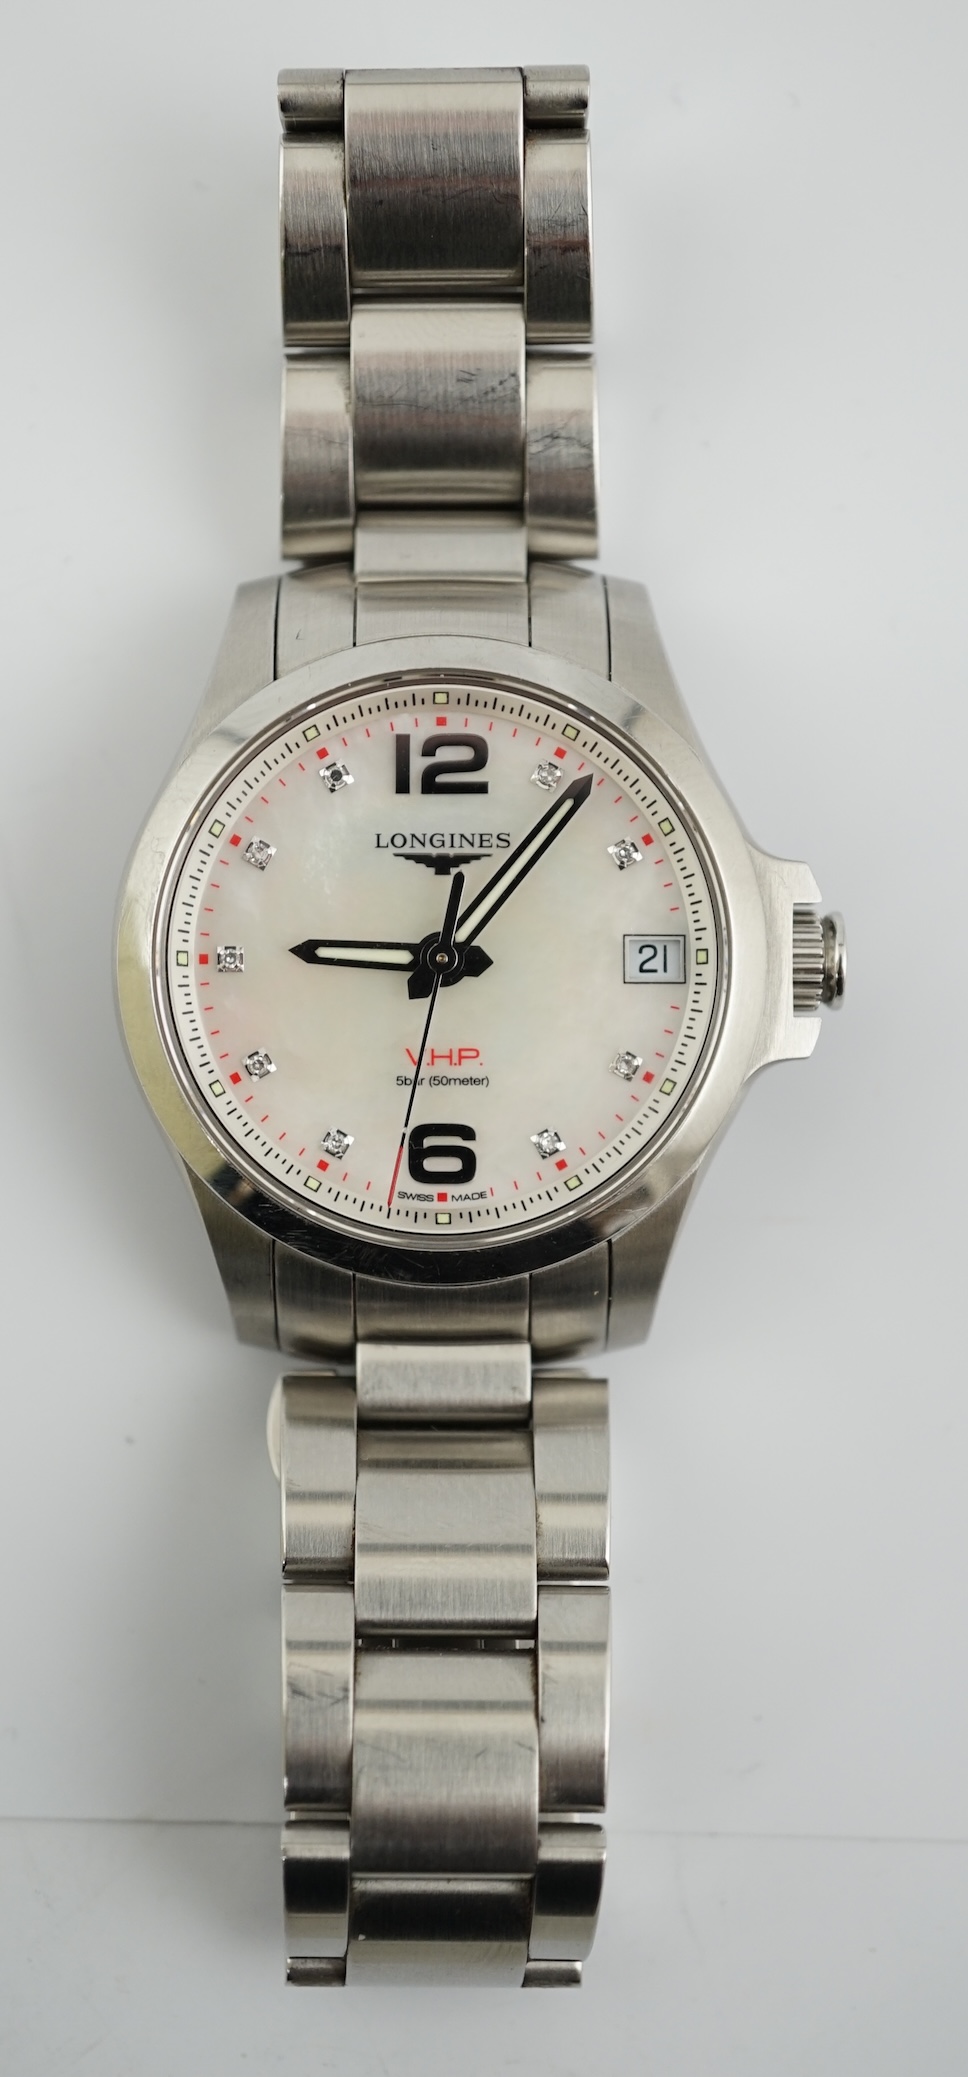 A 2023 stainless steel Longines Conquest VHP quartz wrist watch